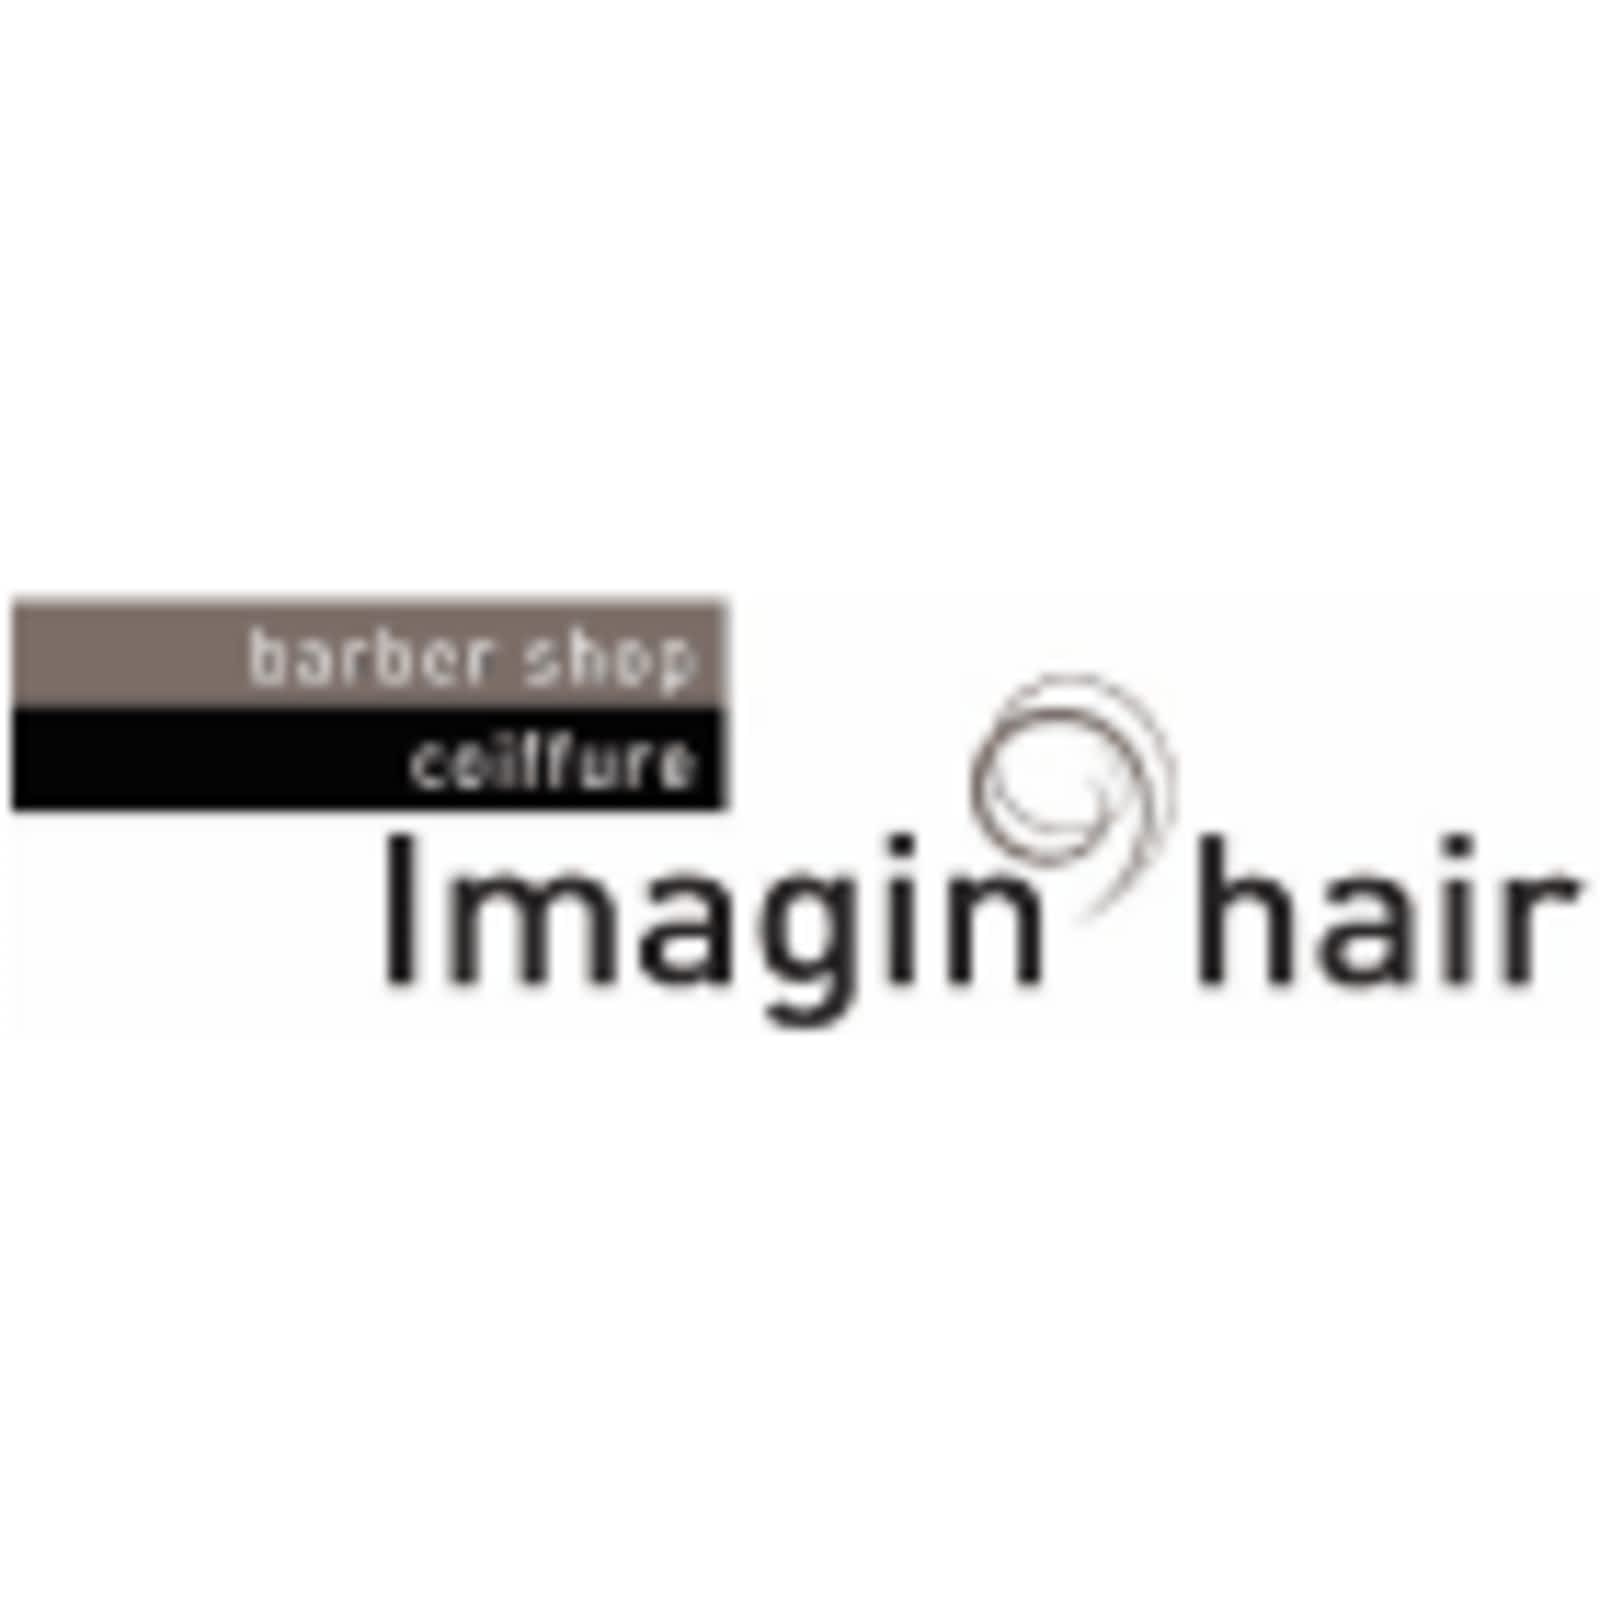 Coiffure Imagin'hair 5 Rte du Président-Kennedy, Lévis Quebec G6V 6C1